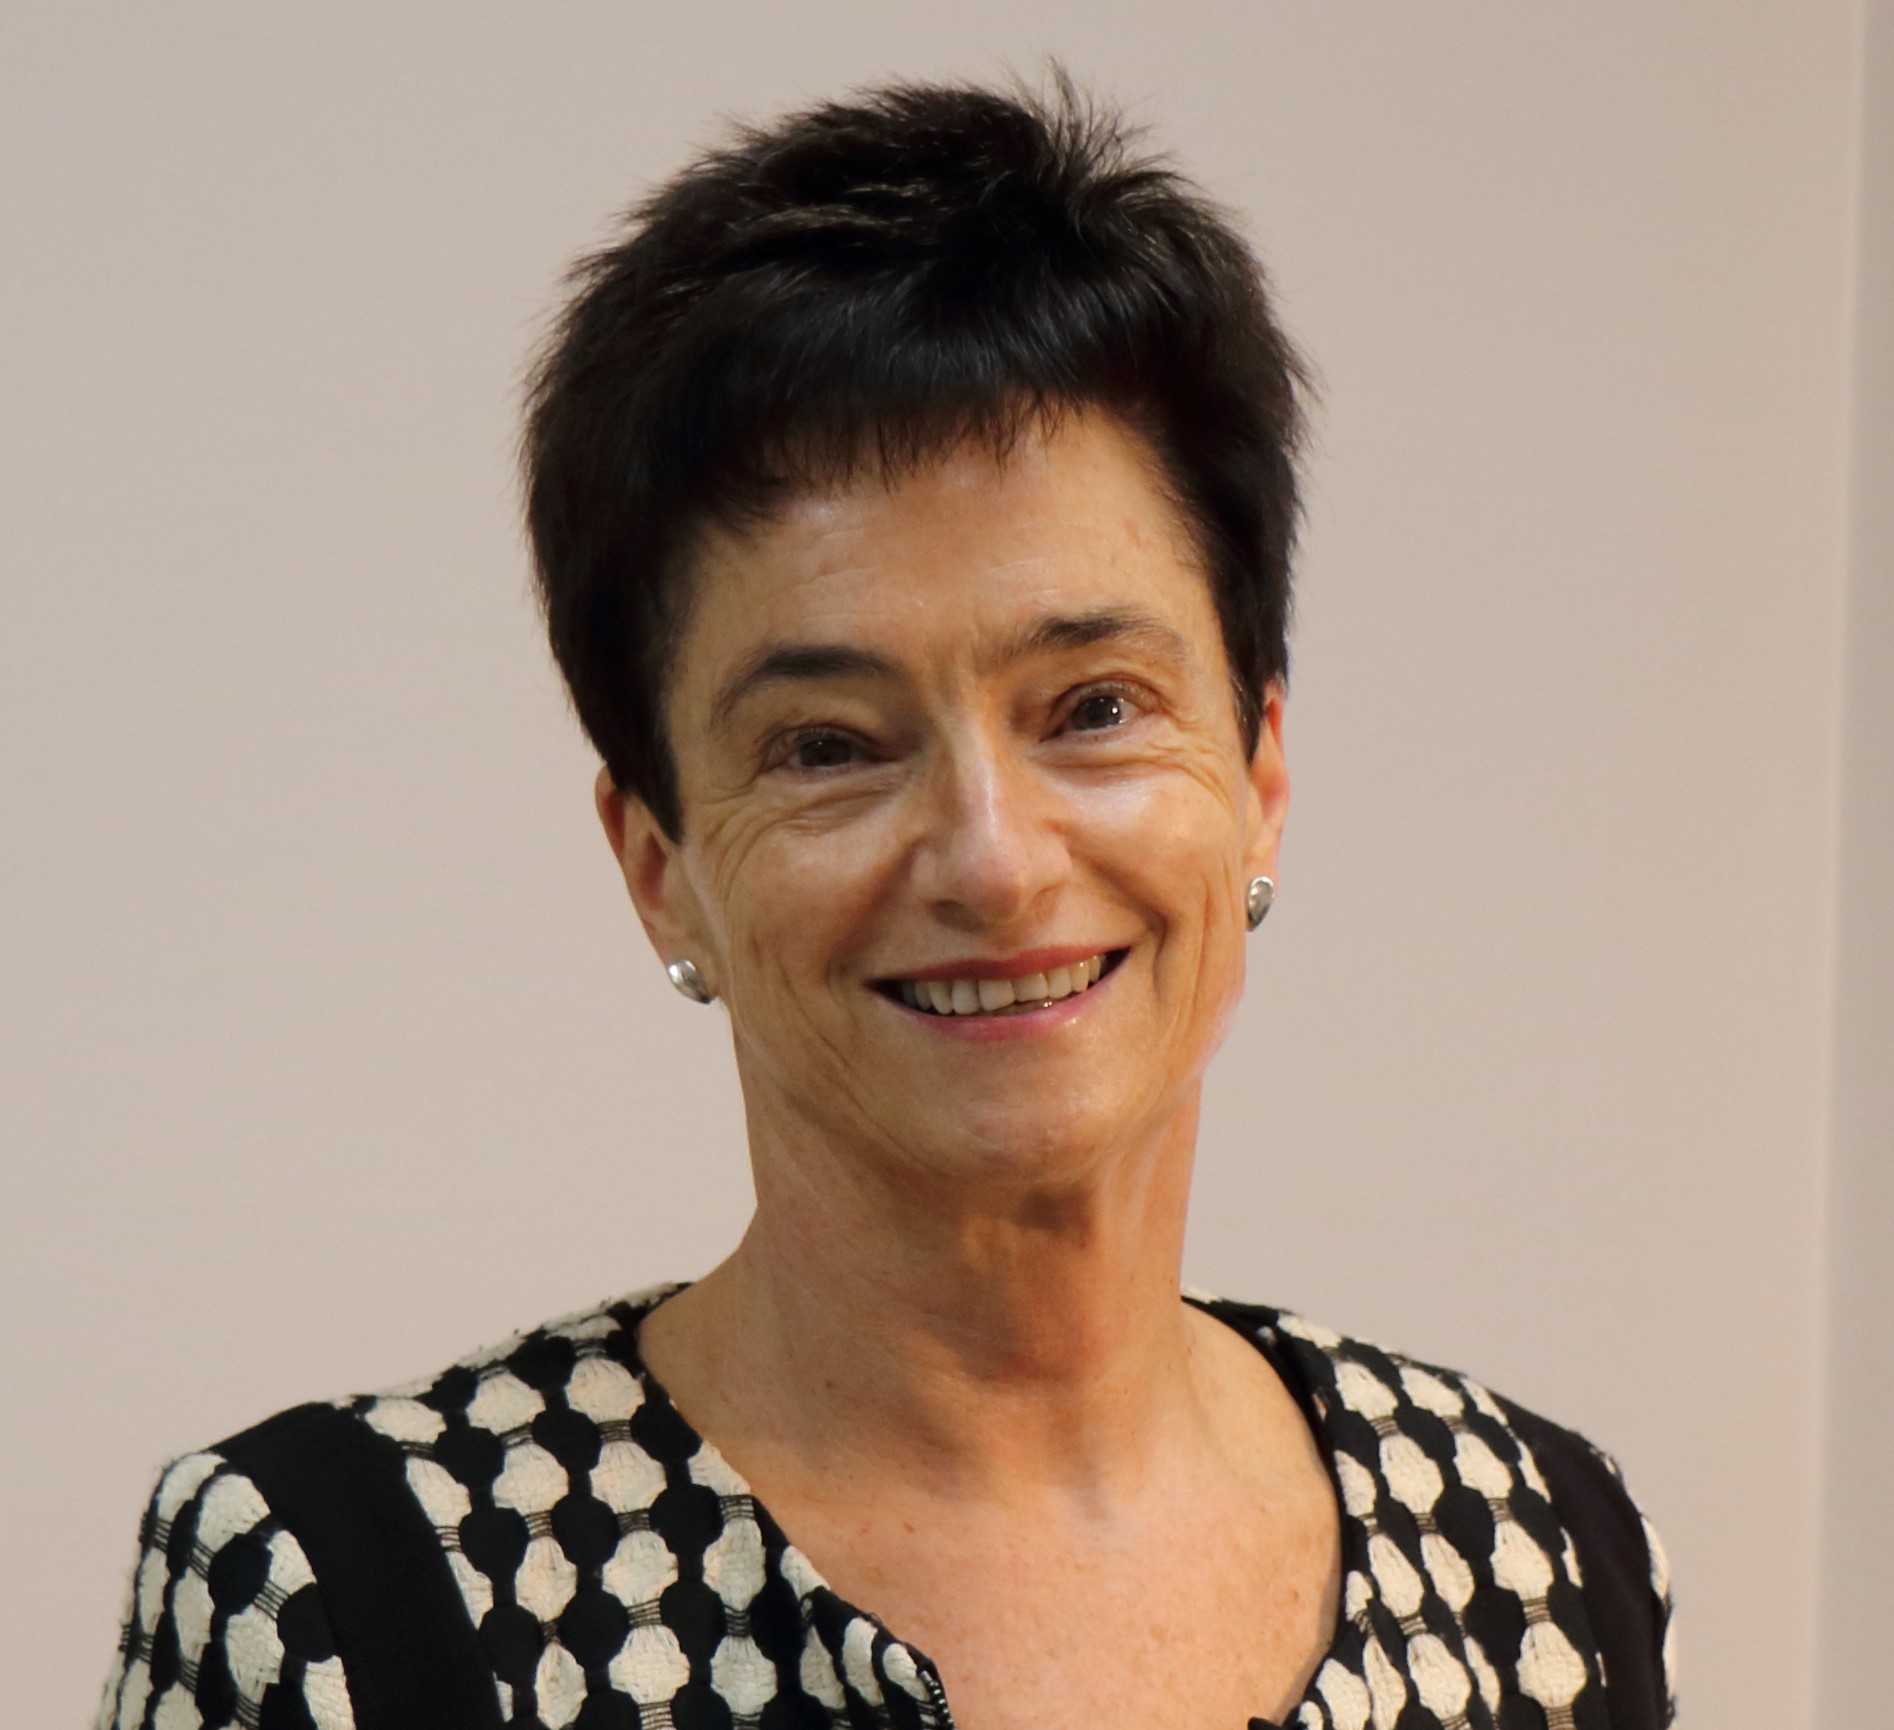 Professor Susan Kurrle